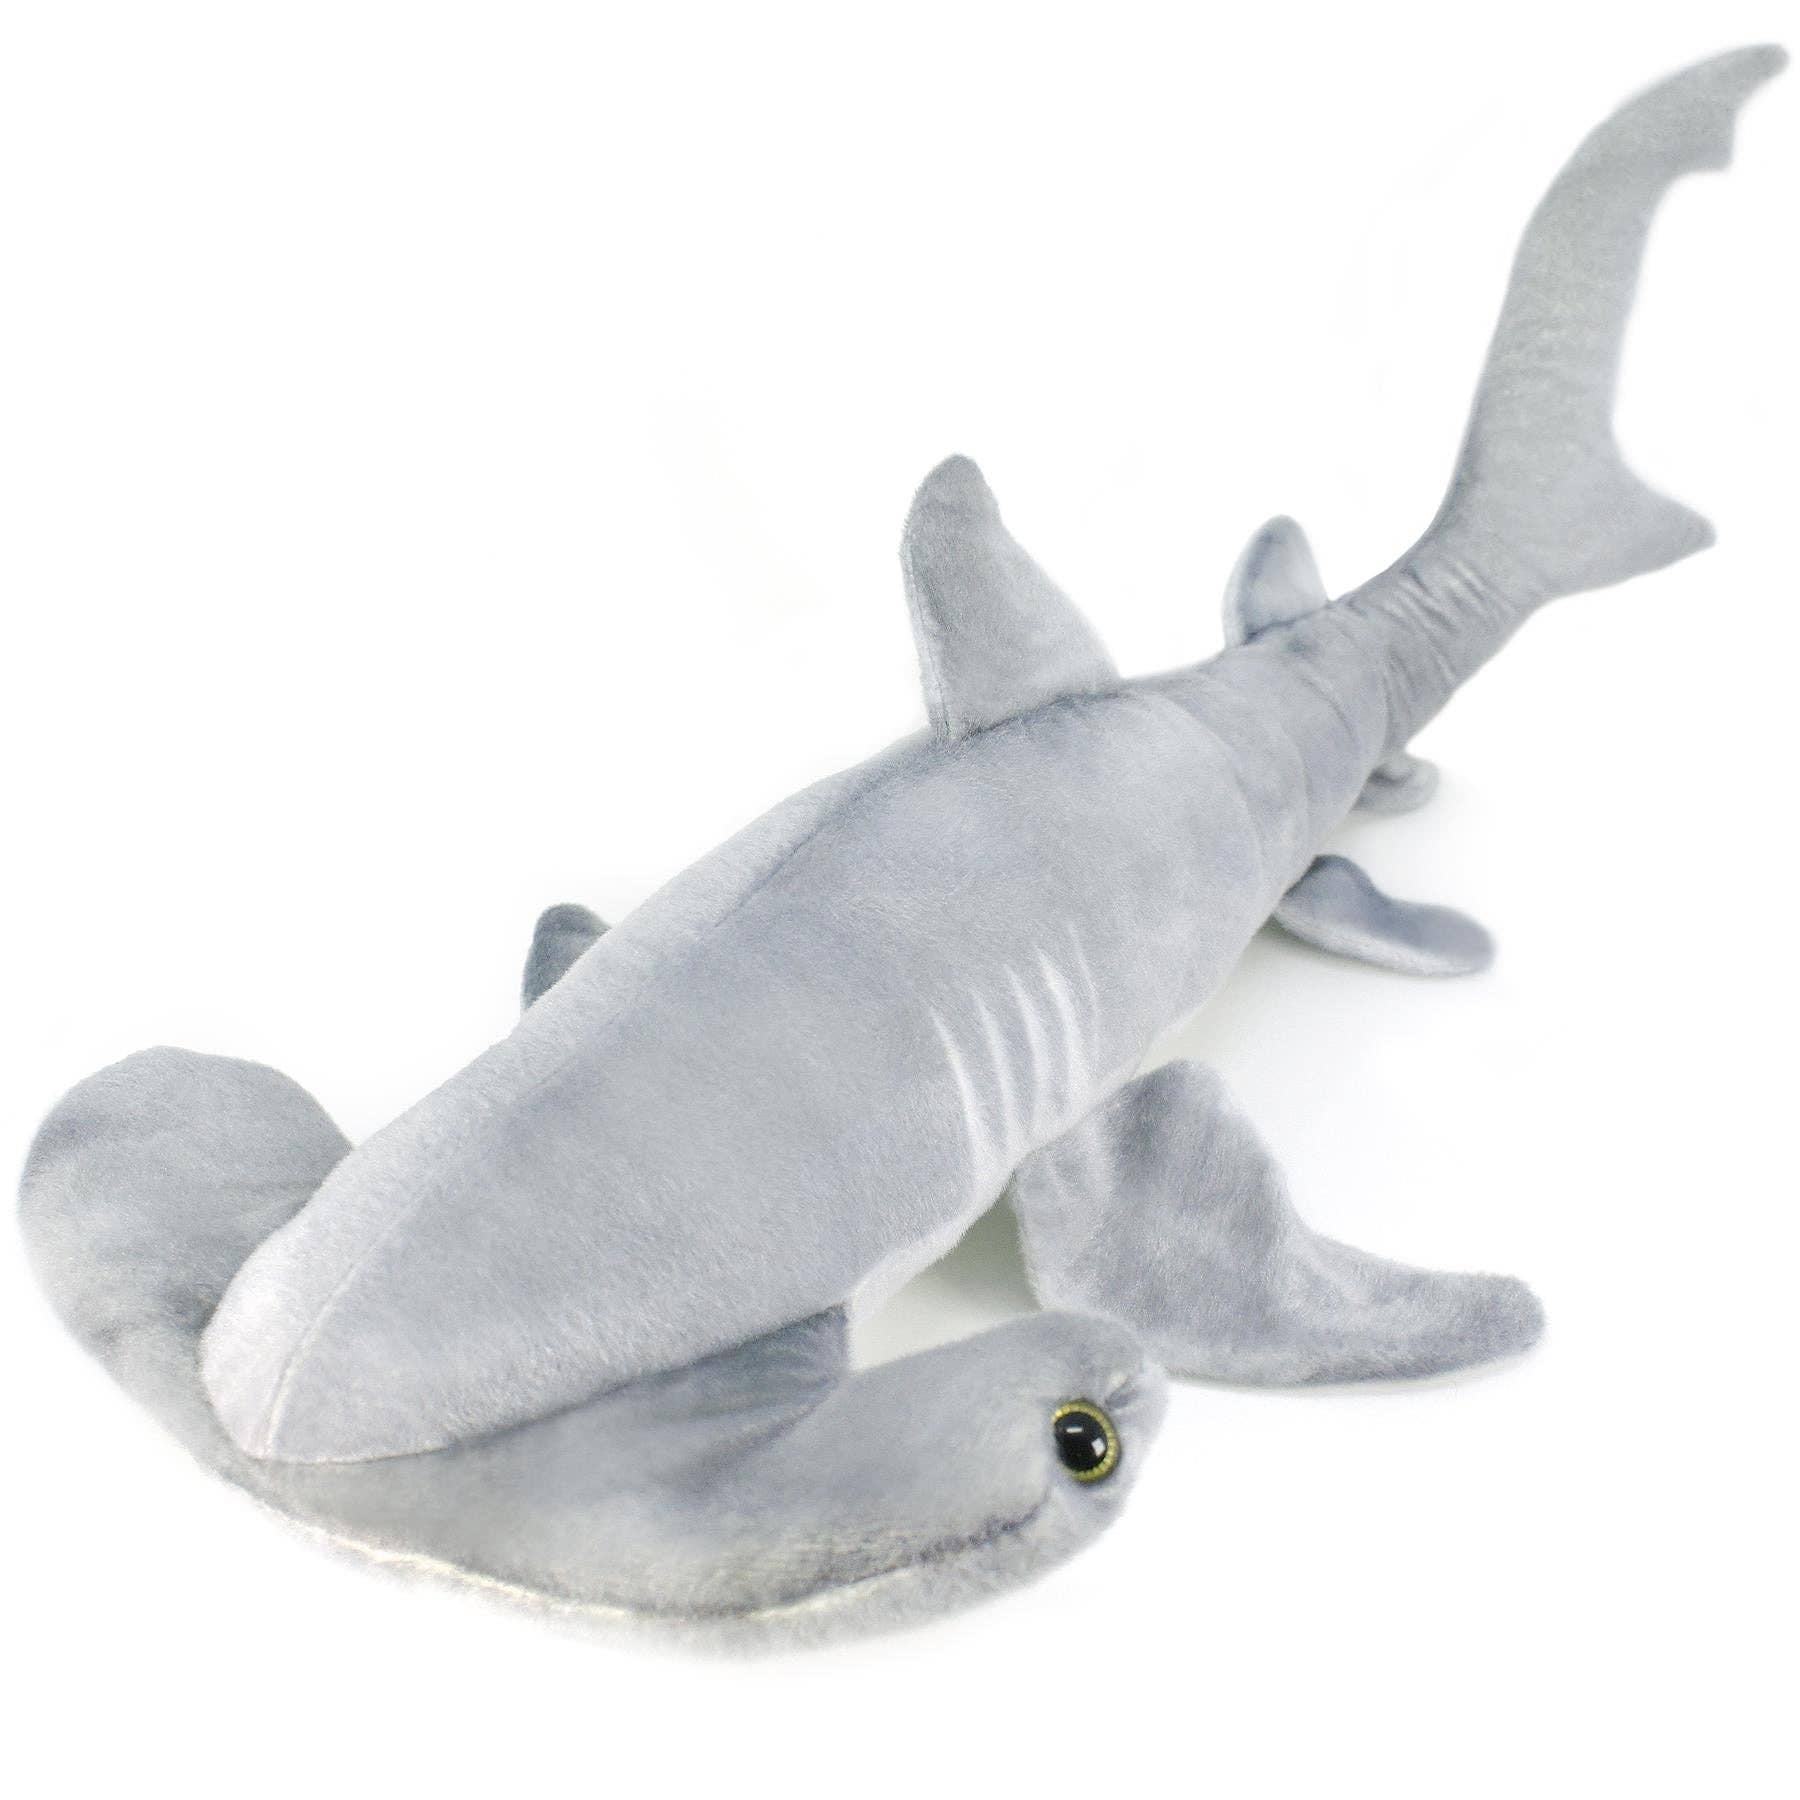 MC The Hammerhead Shark 31" Stuffed Animal Plush